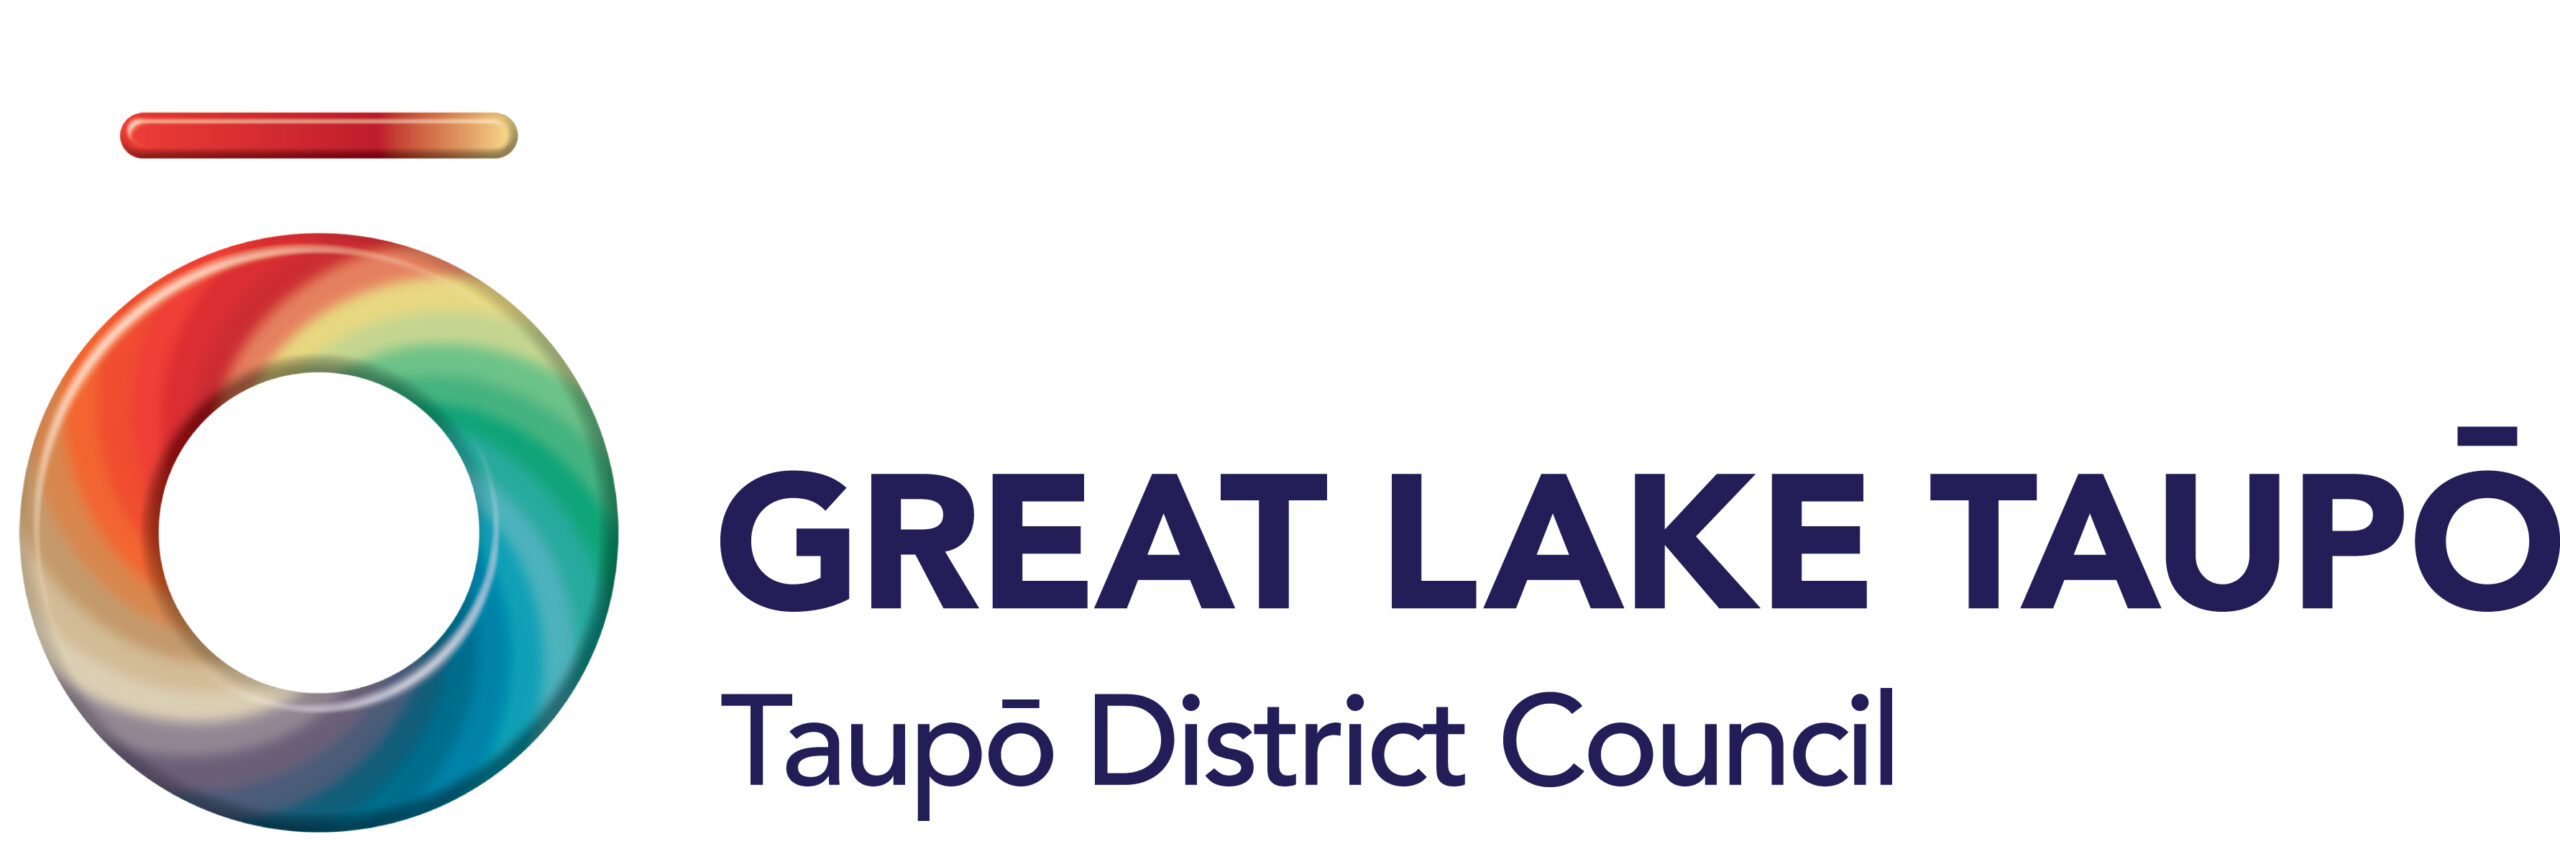 GLT_Taupo District Council_hor